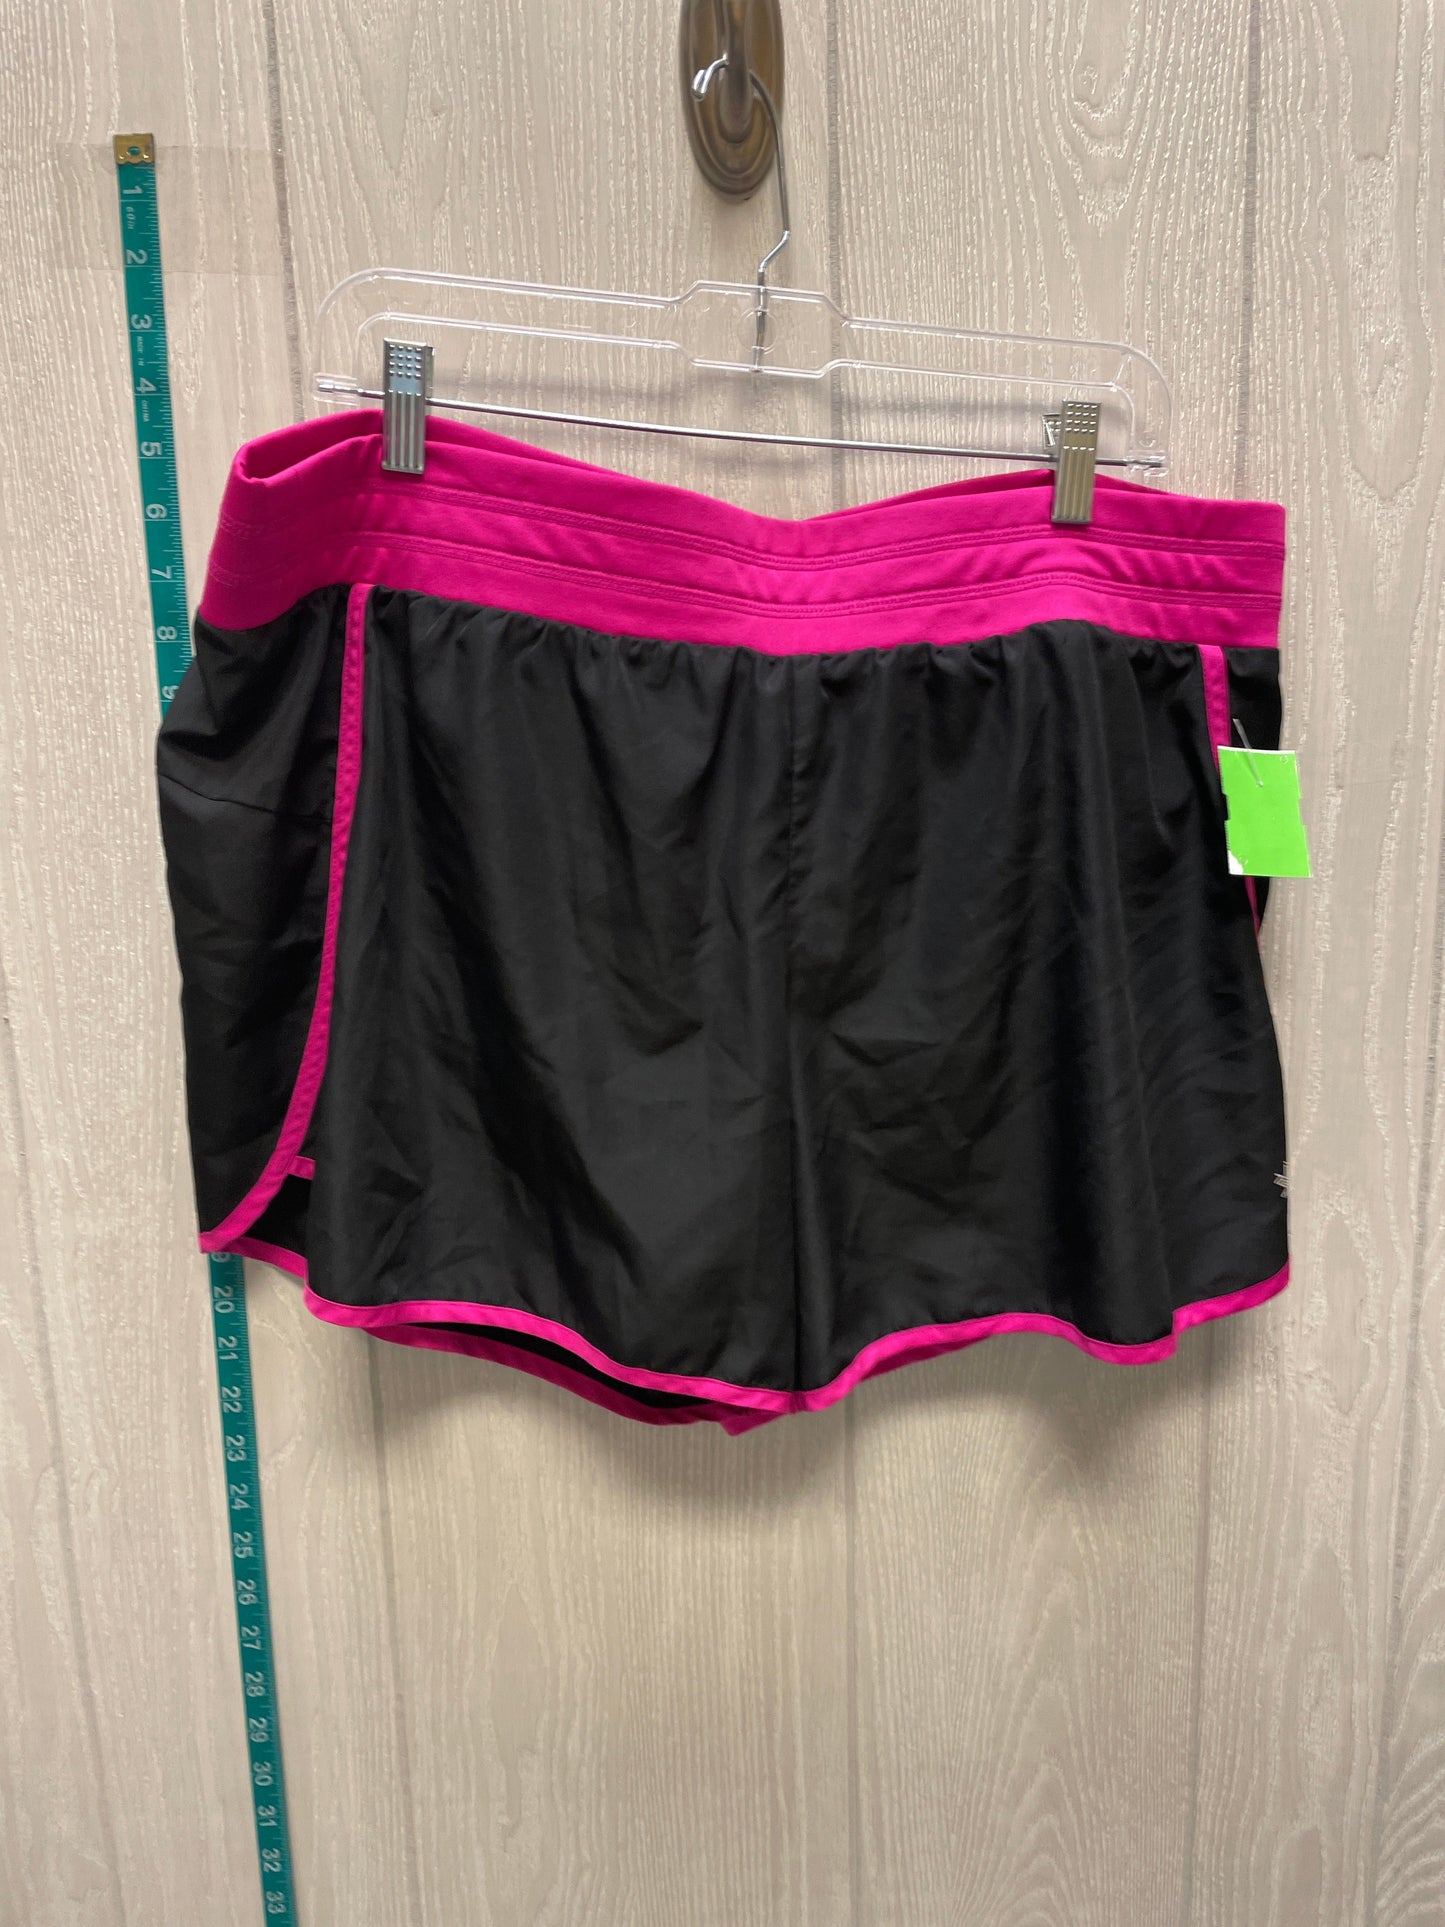 Black & Pink Athletic Shorts Tek Gear, Size 2